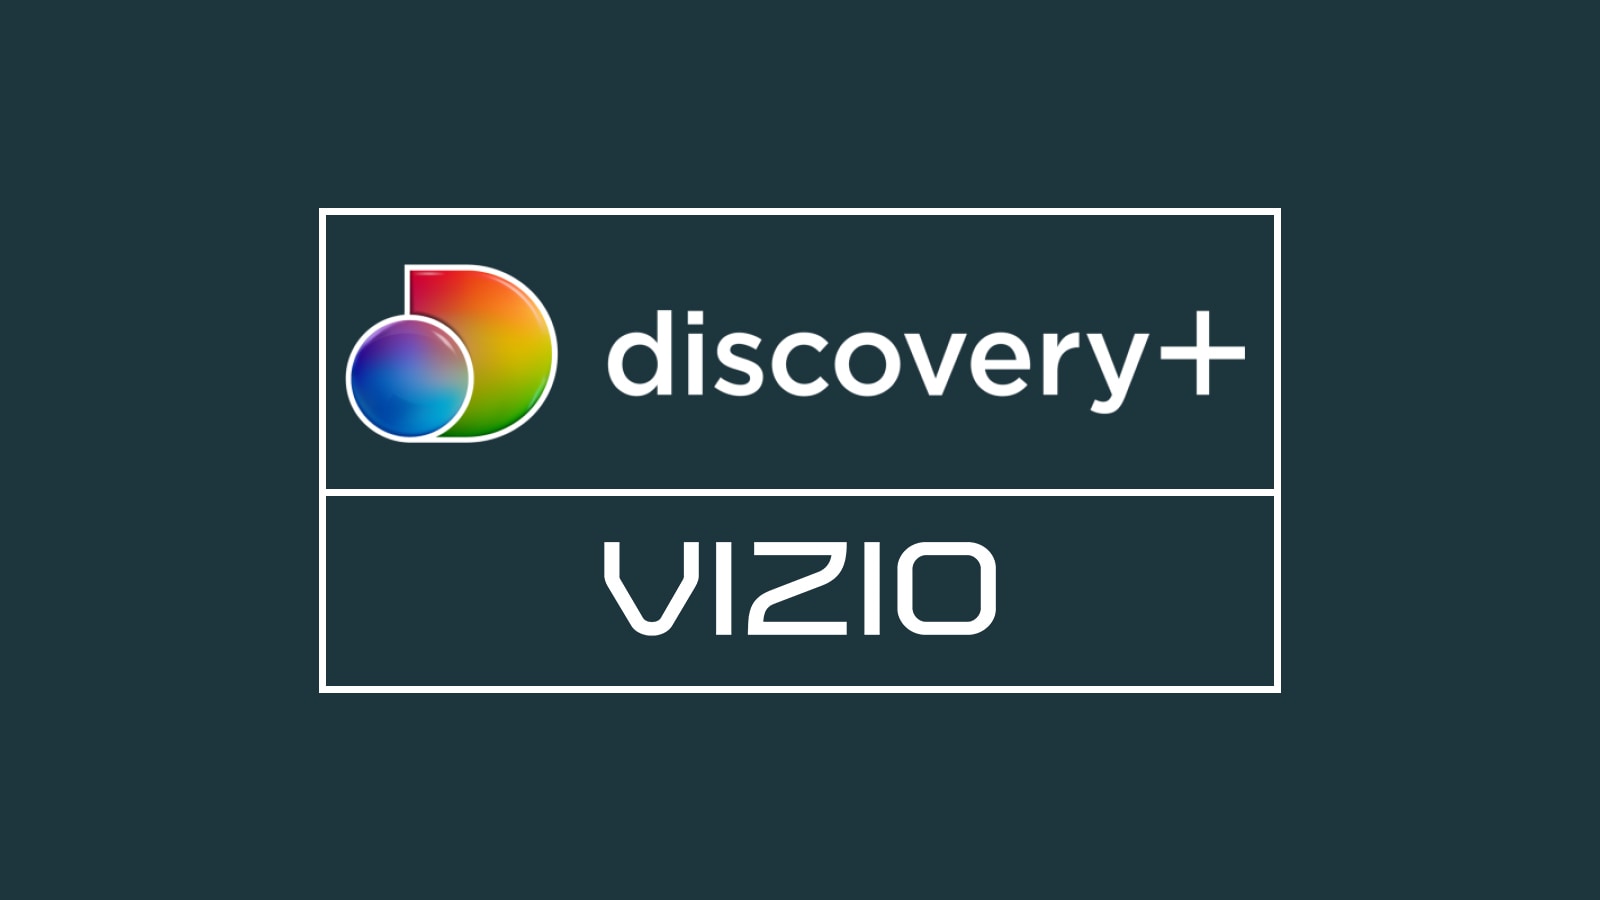 Discovery Plus Vizio Logos